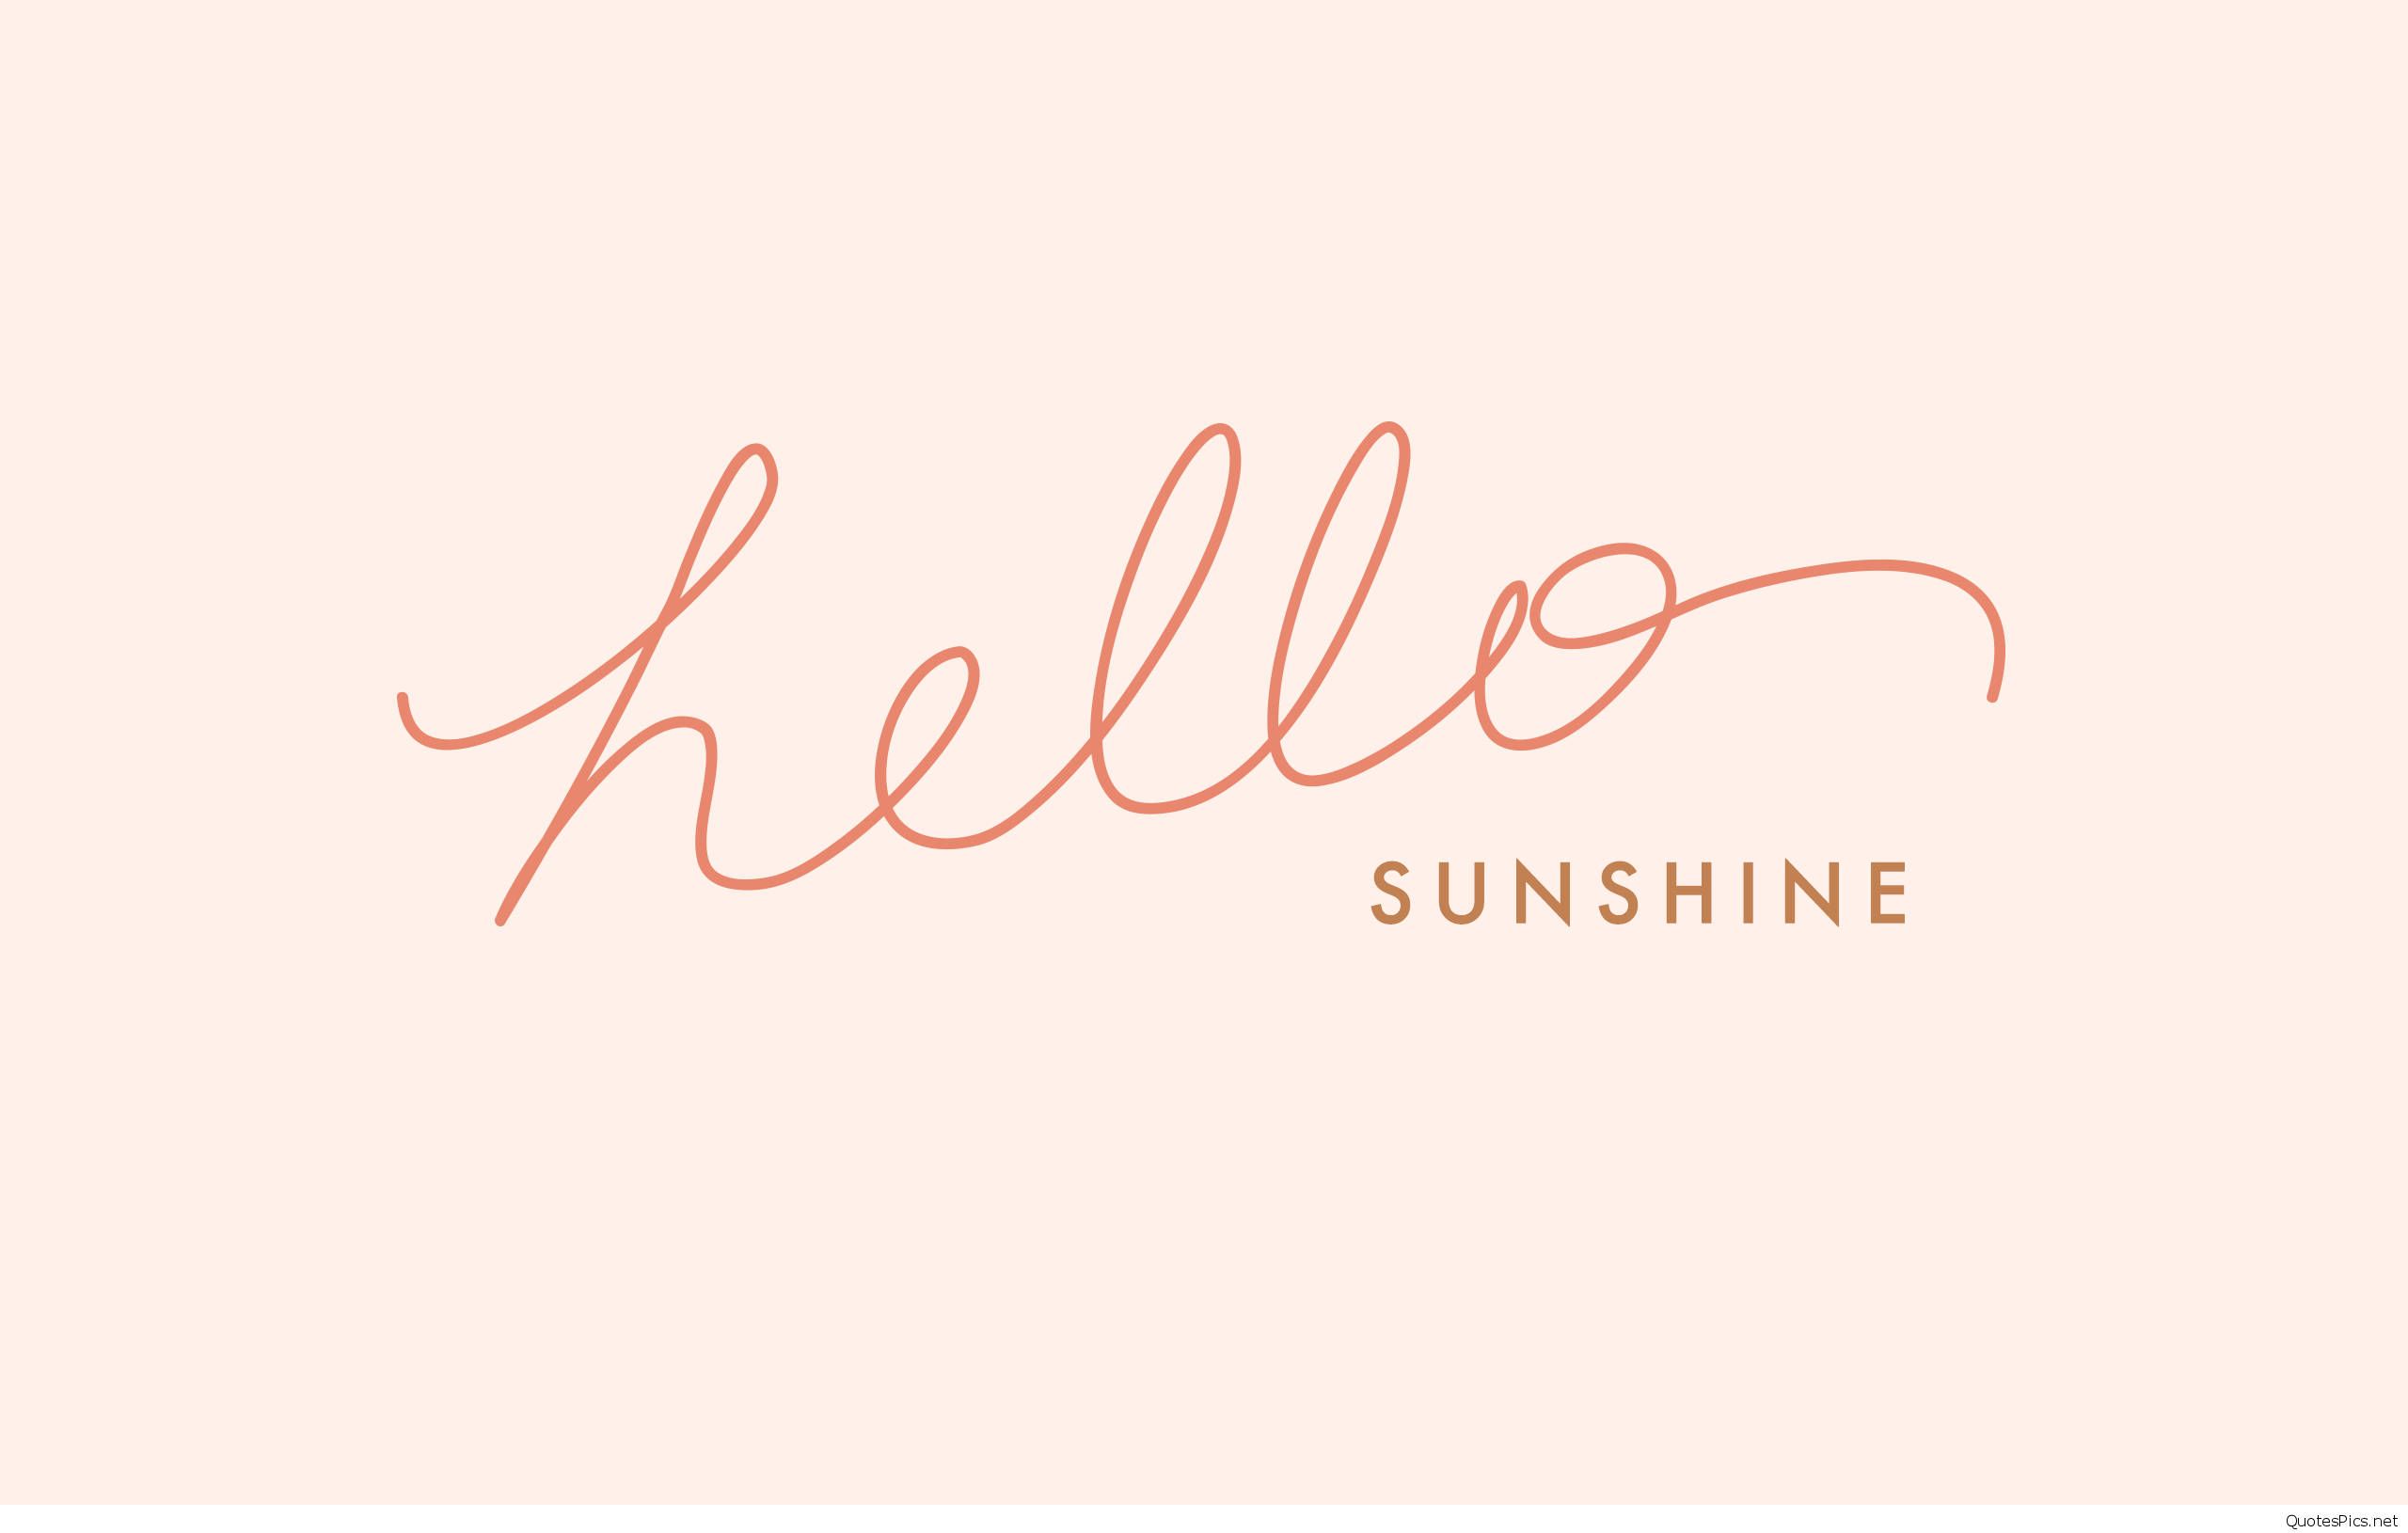 Hello sunshine wallpaper for your phone or desktop computer. - Sunshine